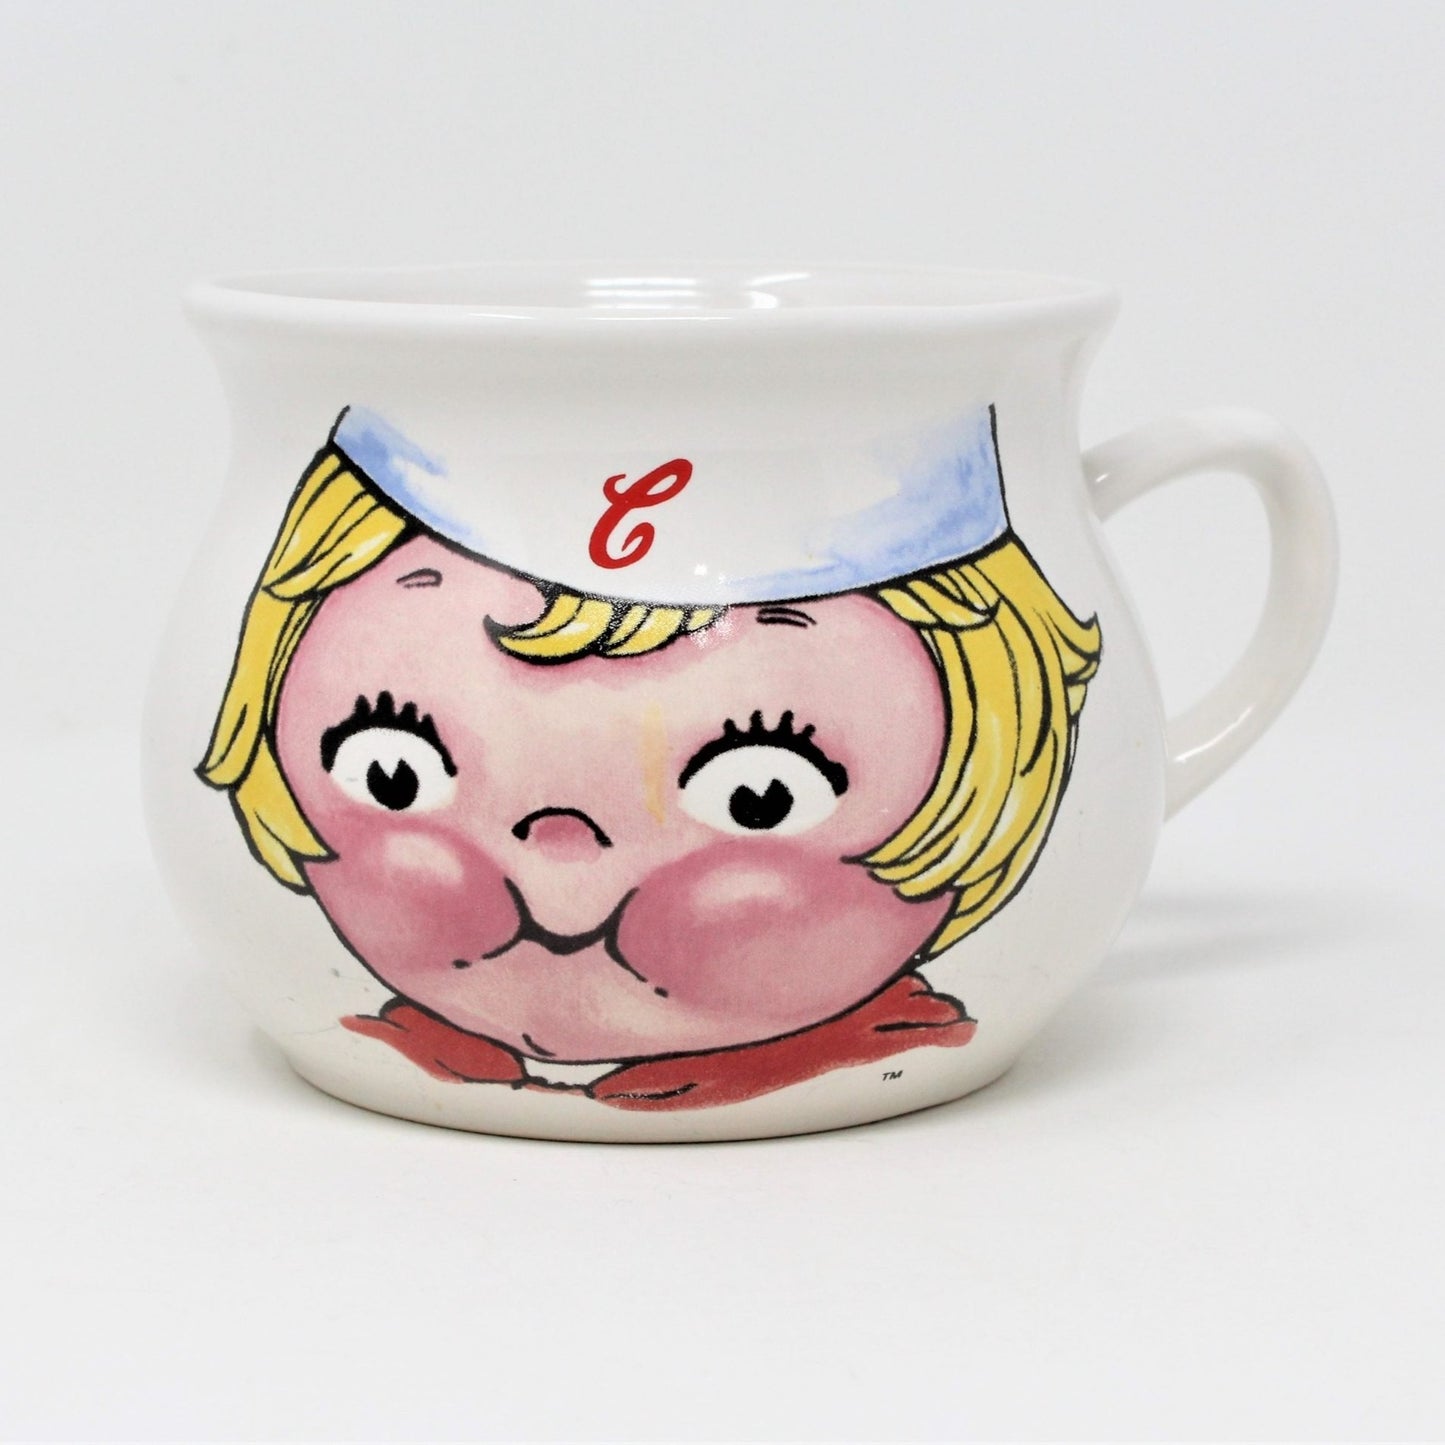 Soup Mug, Campbell's Kids, Large Face, HH Ceramic, 1998